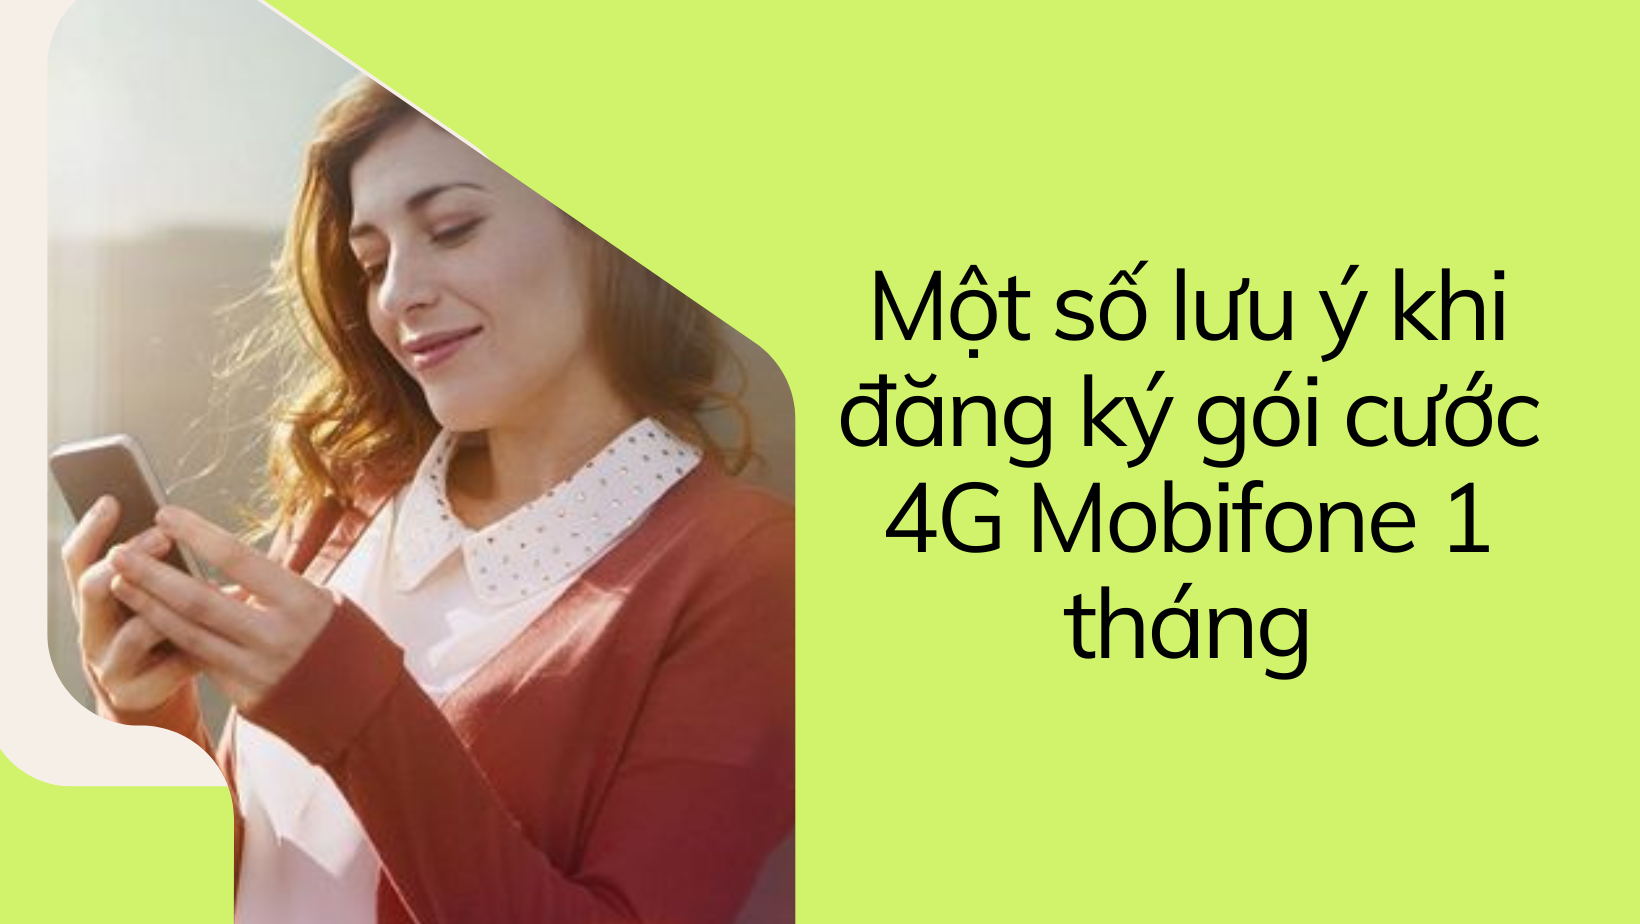 mot-so-luu-y-khi-dang-ky-goi-cuoc-4G-Mobifone